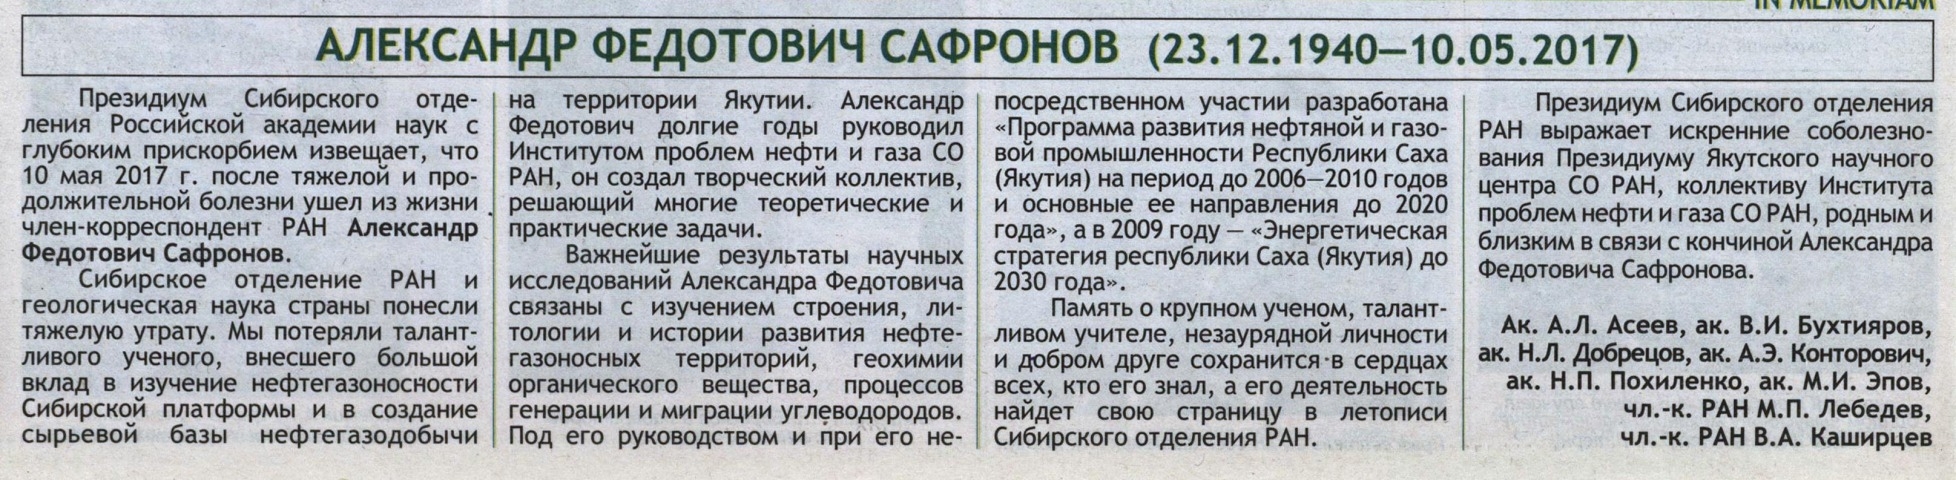 Обложка Электронного документа: Александр Федотович Сафронов (23.12.1940 - 10.05.2017)